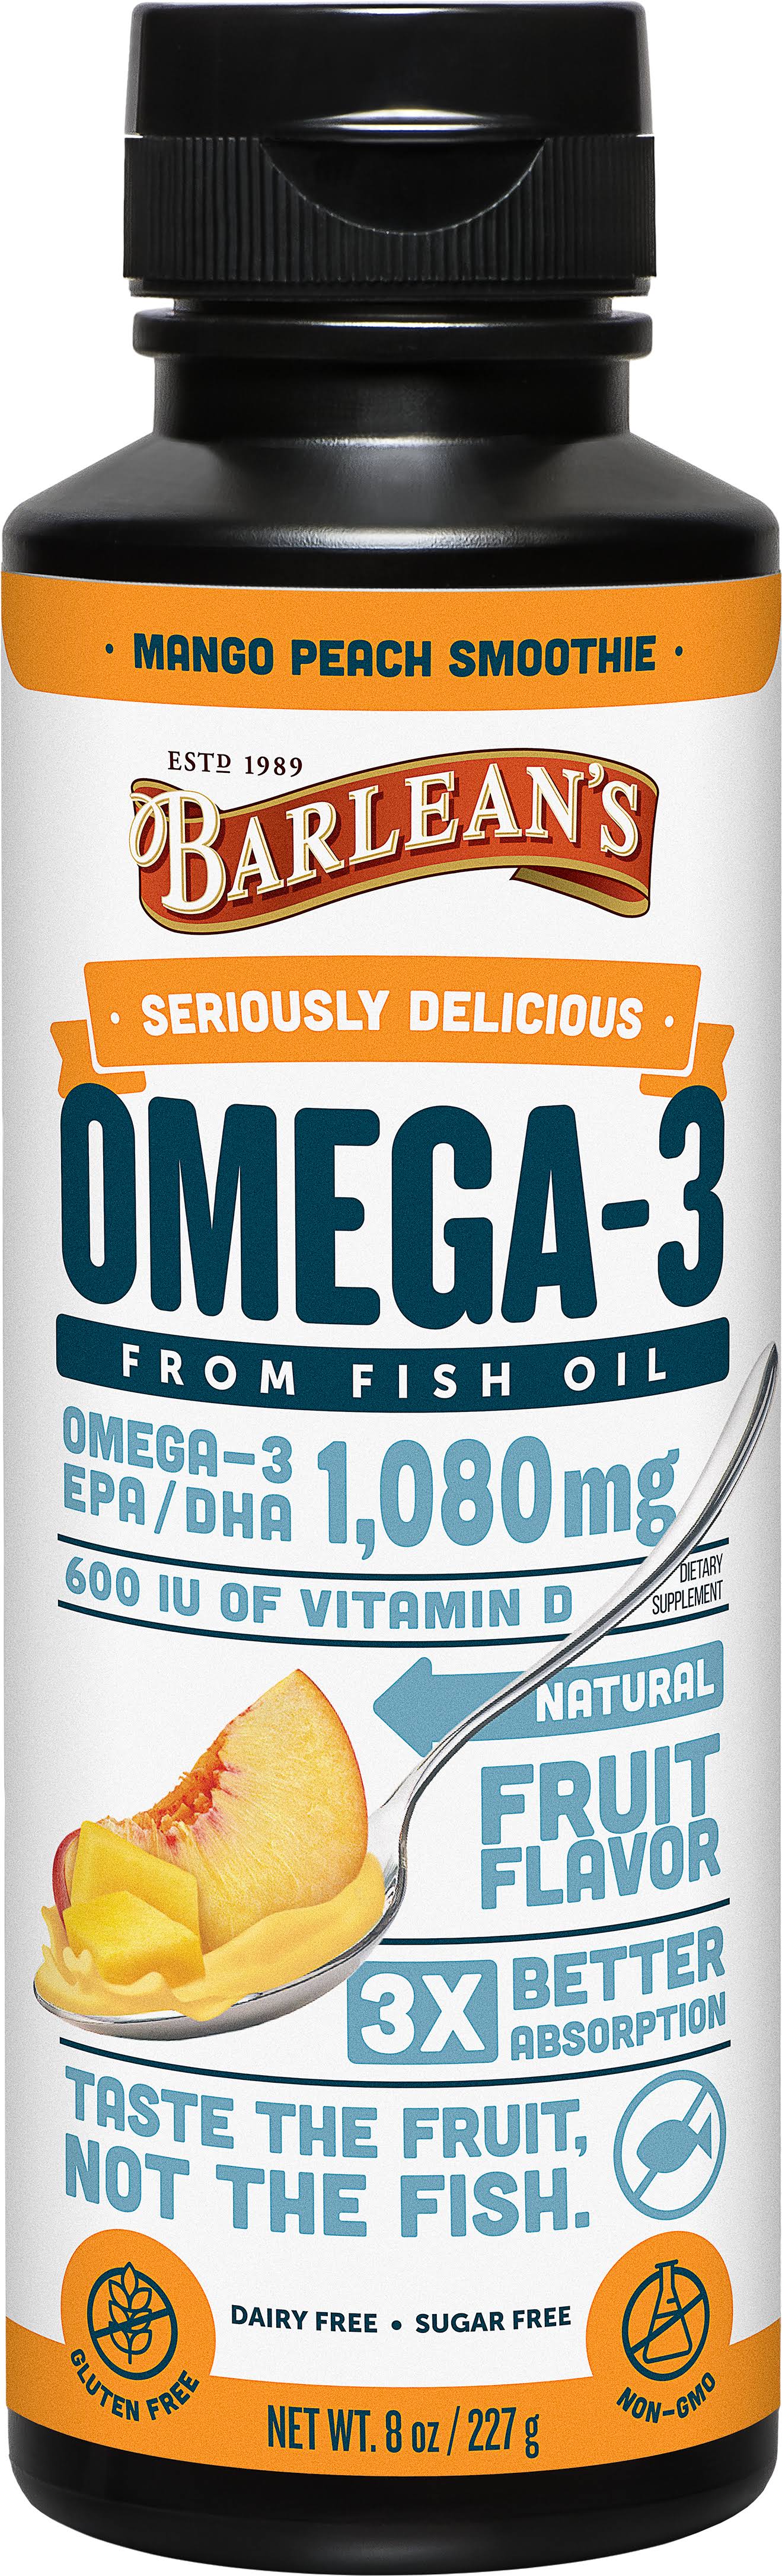 Barlean's Omega Swirl Fish Oil - Mango Peach